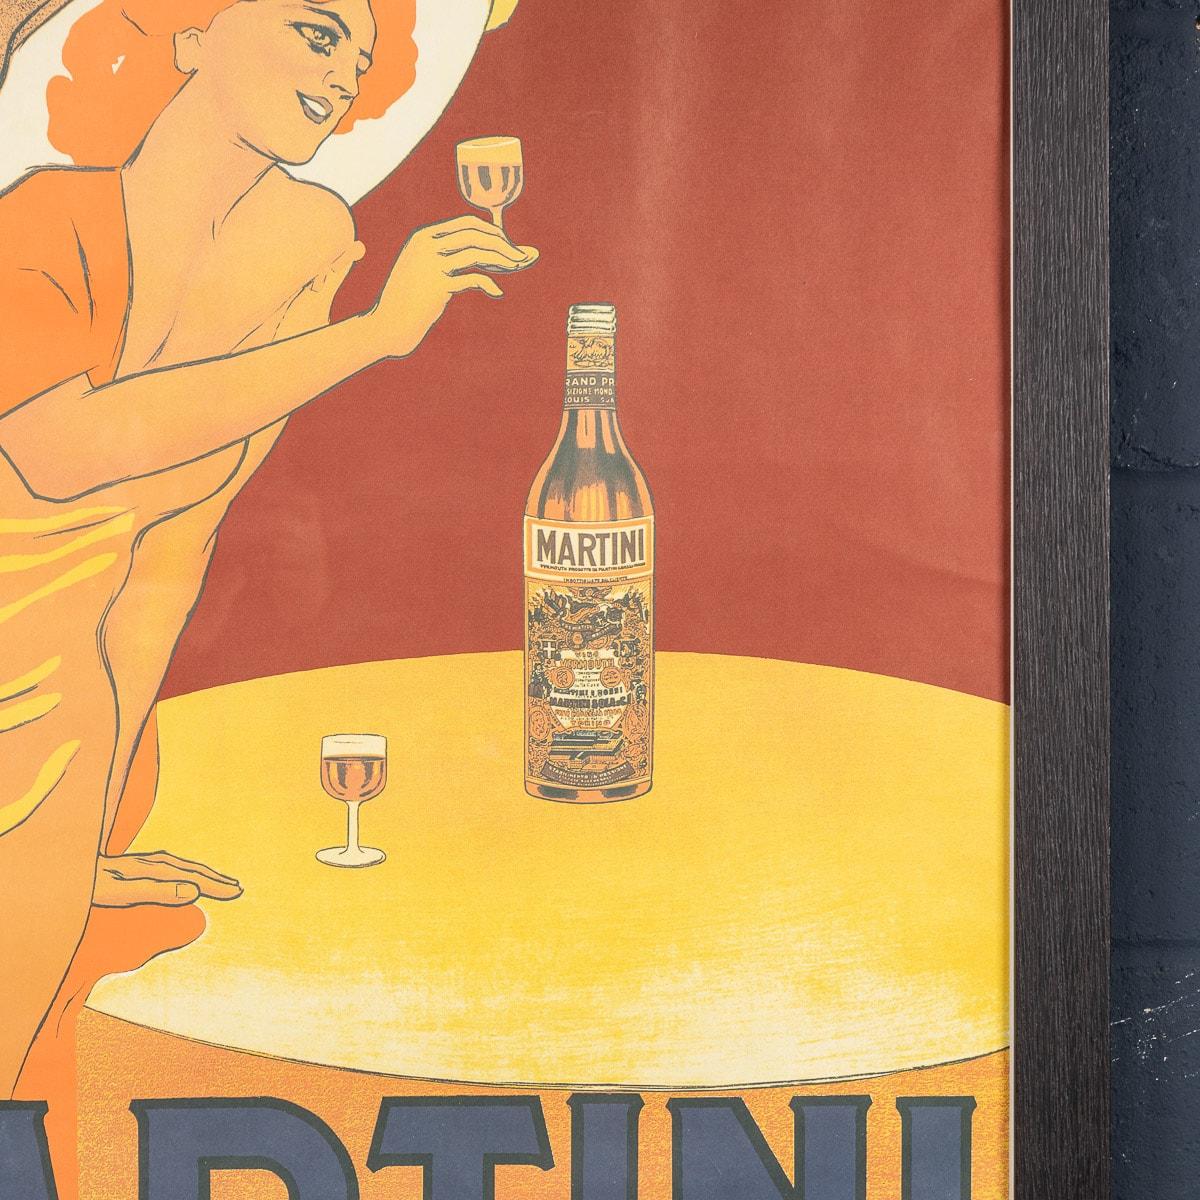 Paper Framed Advertising Poster for Martini, Italy, c.1970